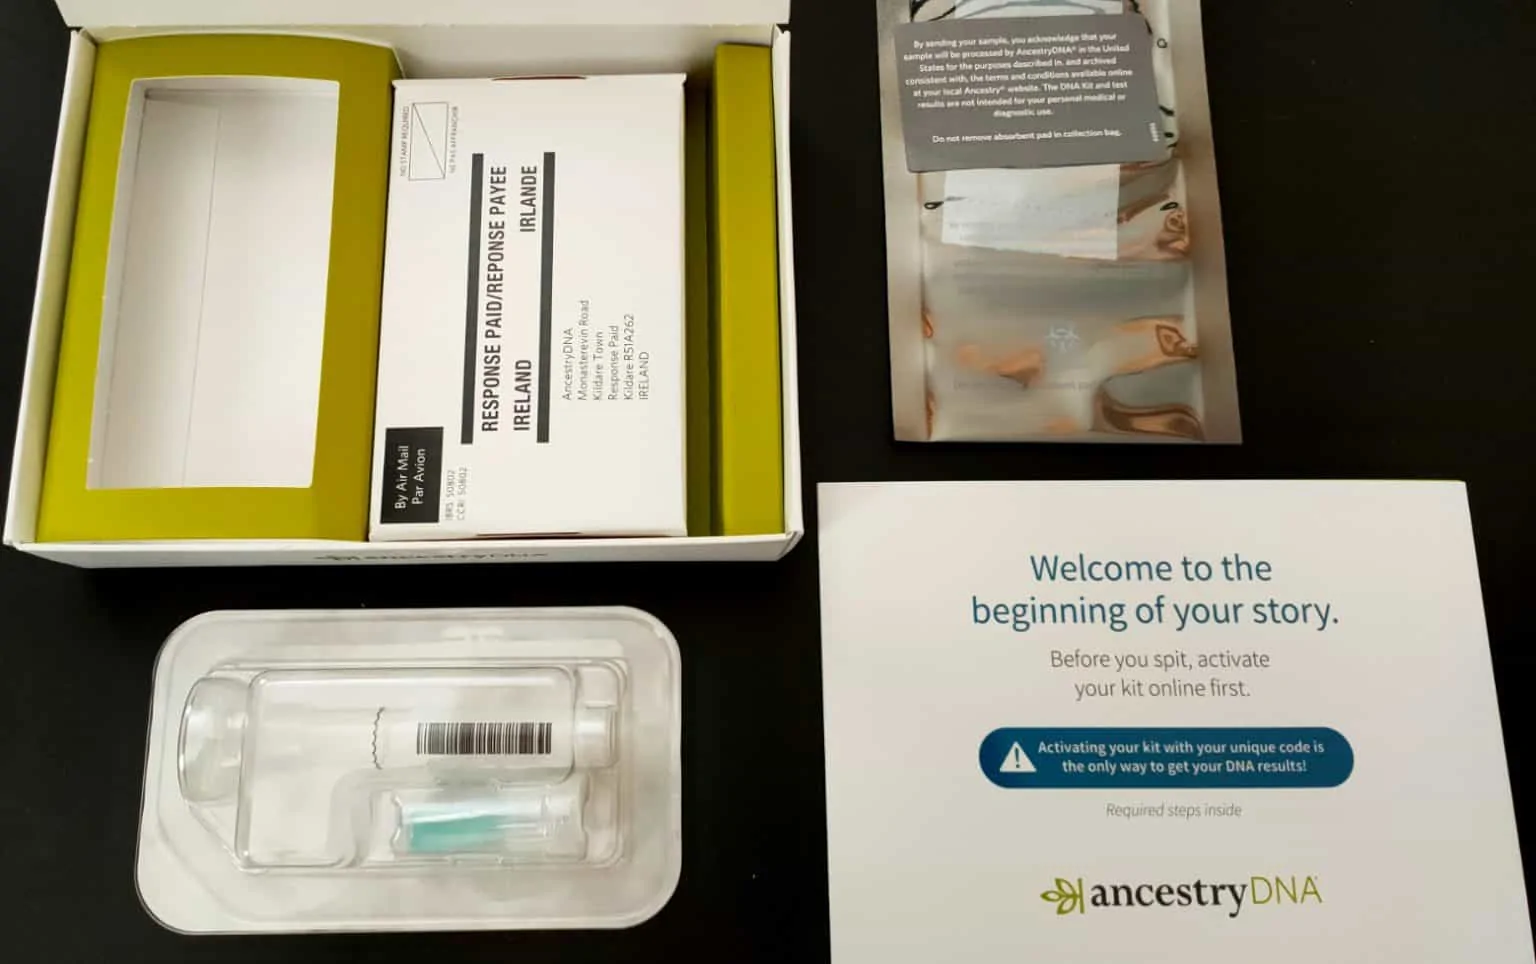 AncestryDNA-Test-Kit-Contents-1536x964.jpg